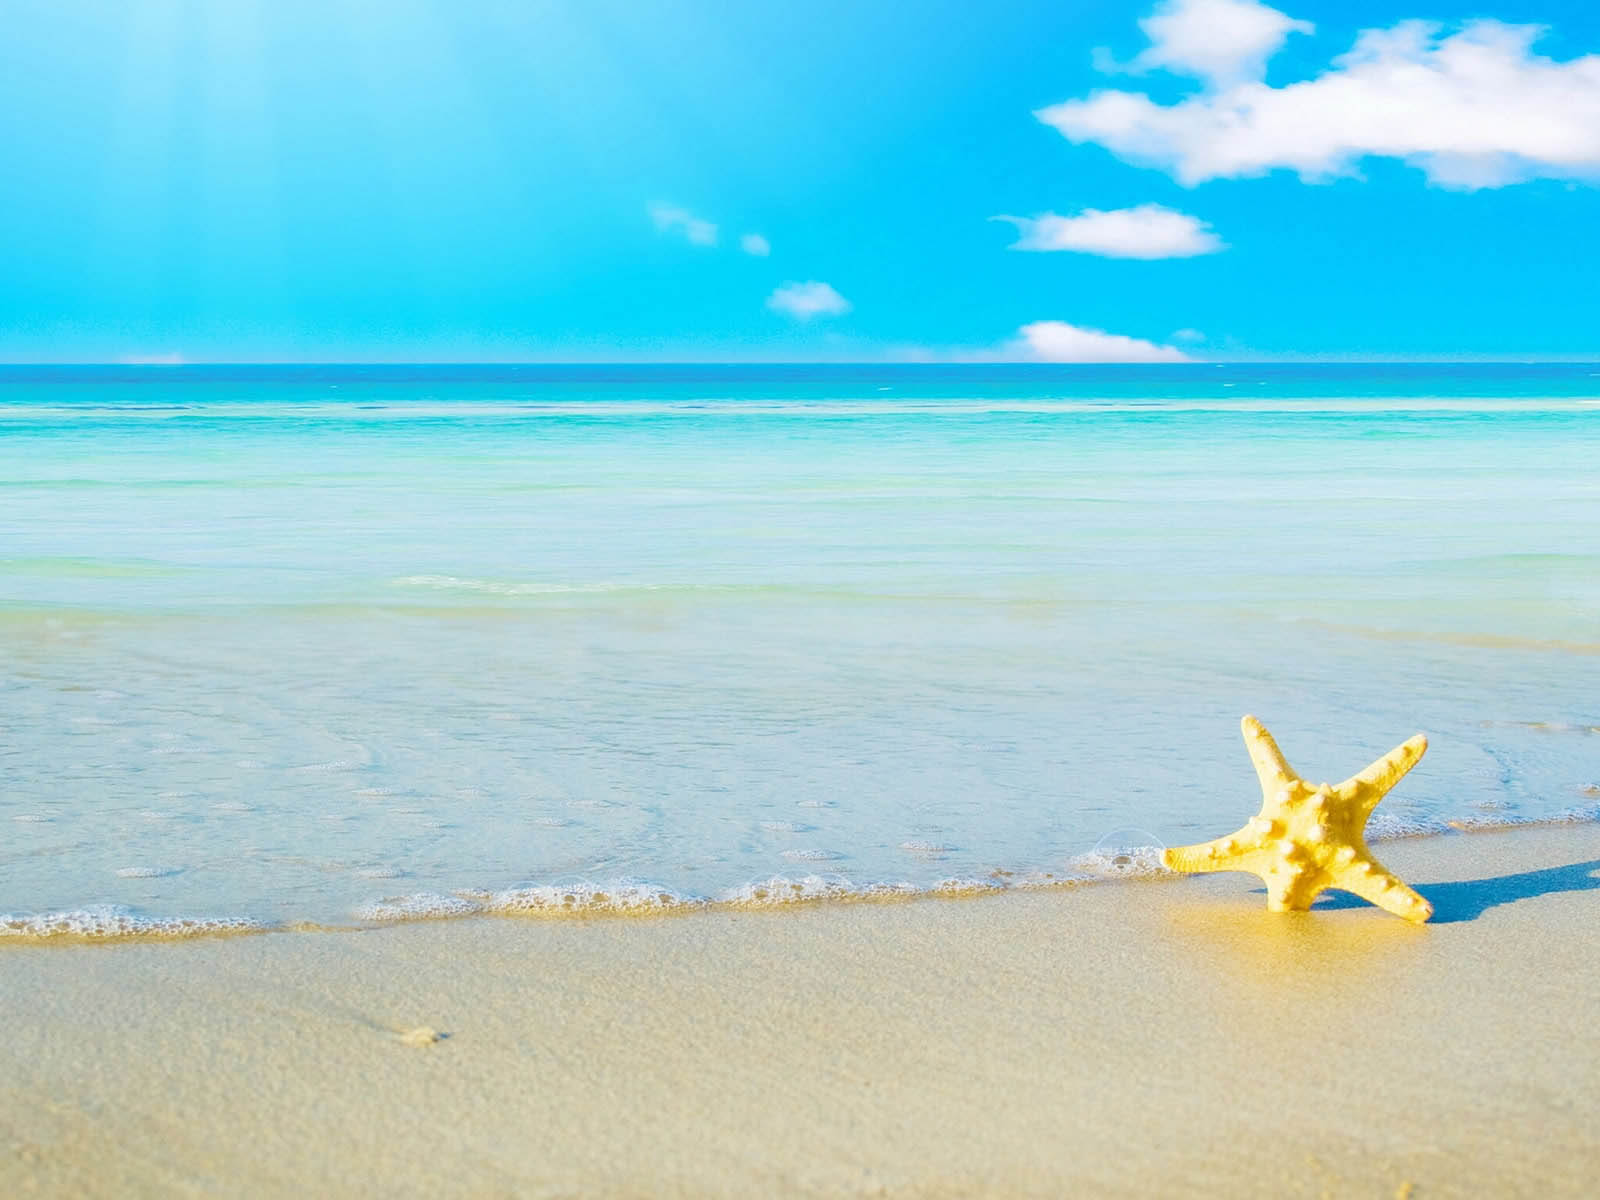 beach themed wallpaper,sky,sea,starfish,ocean,blue